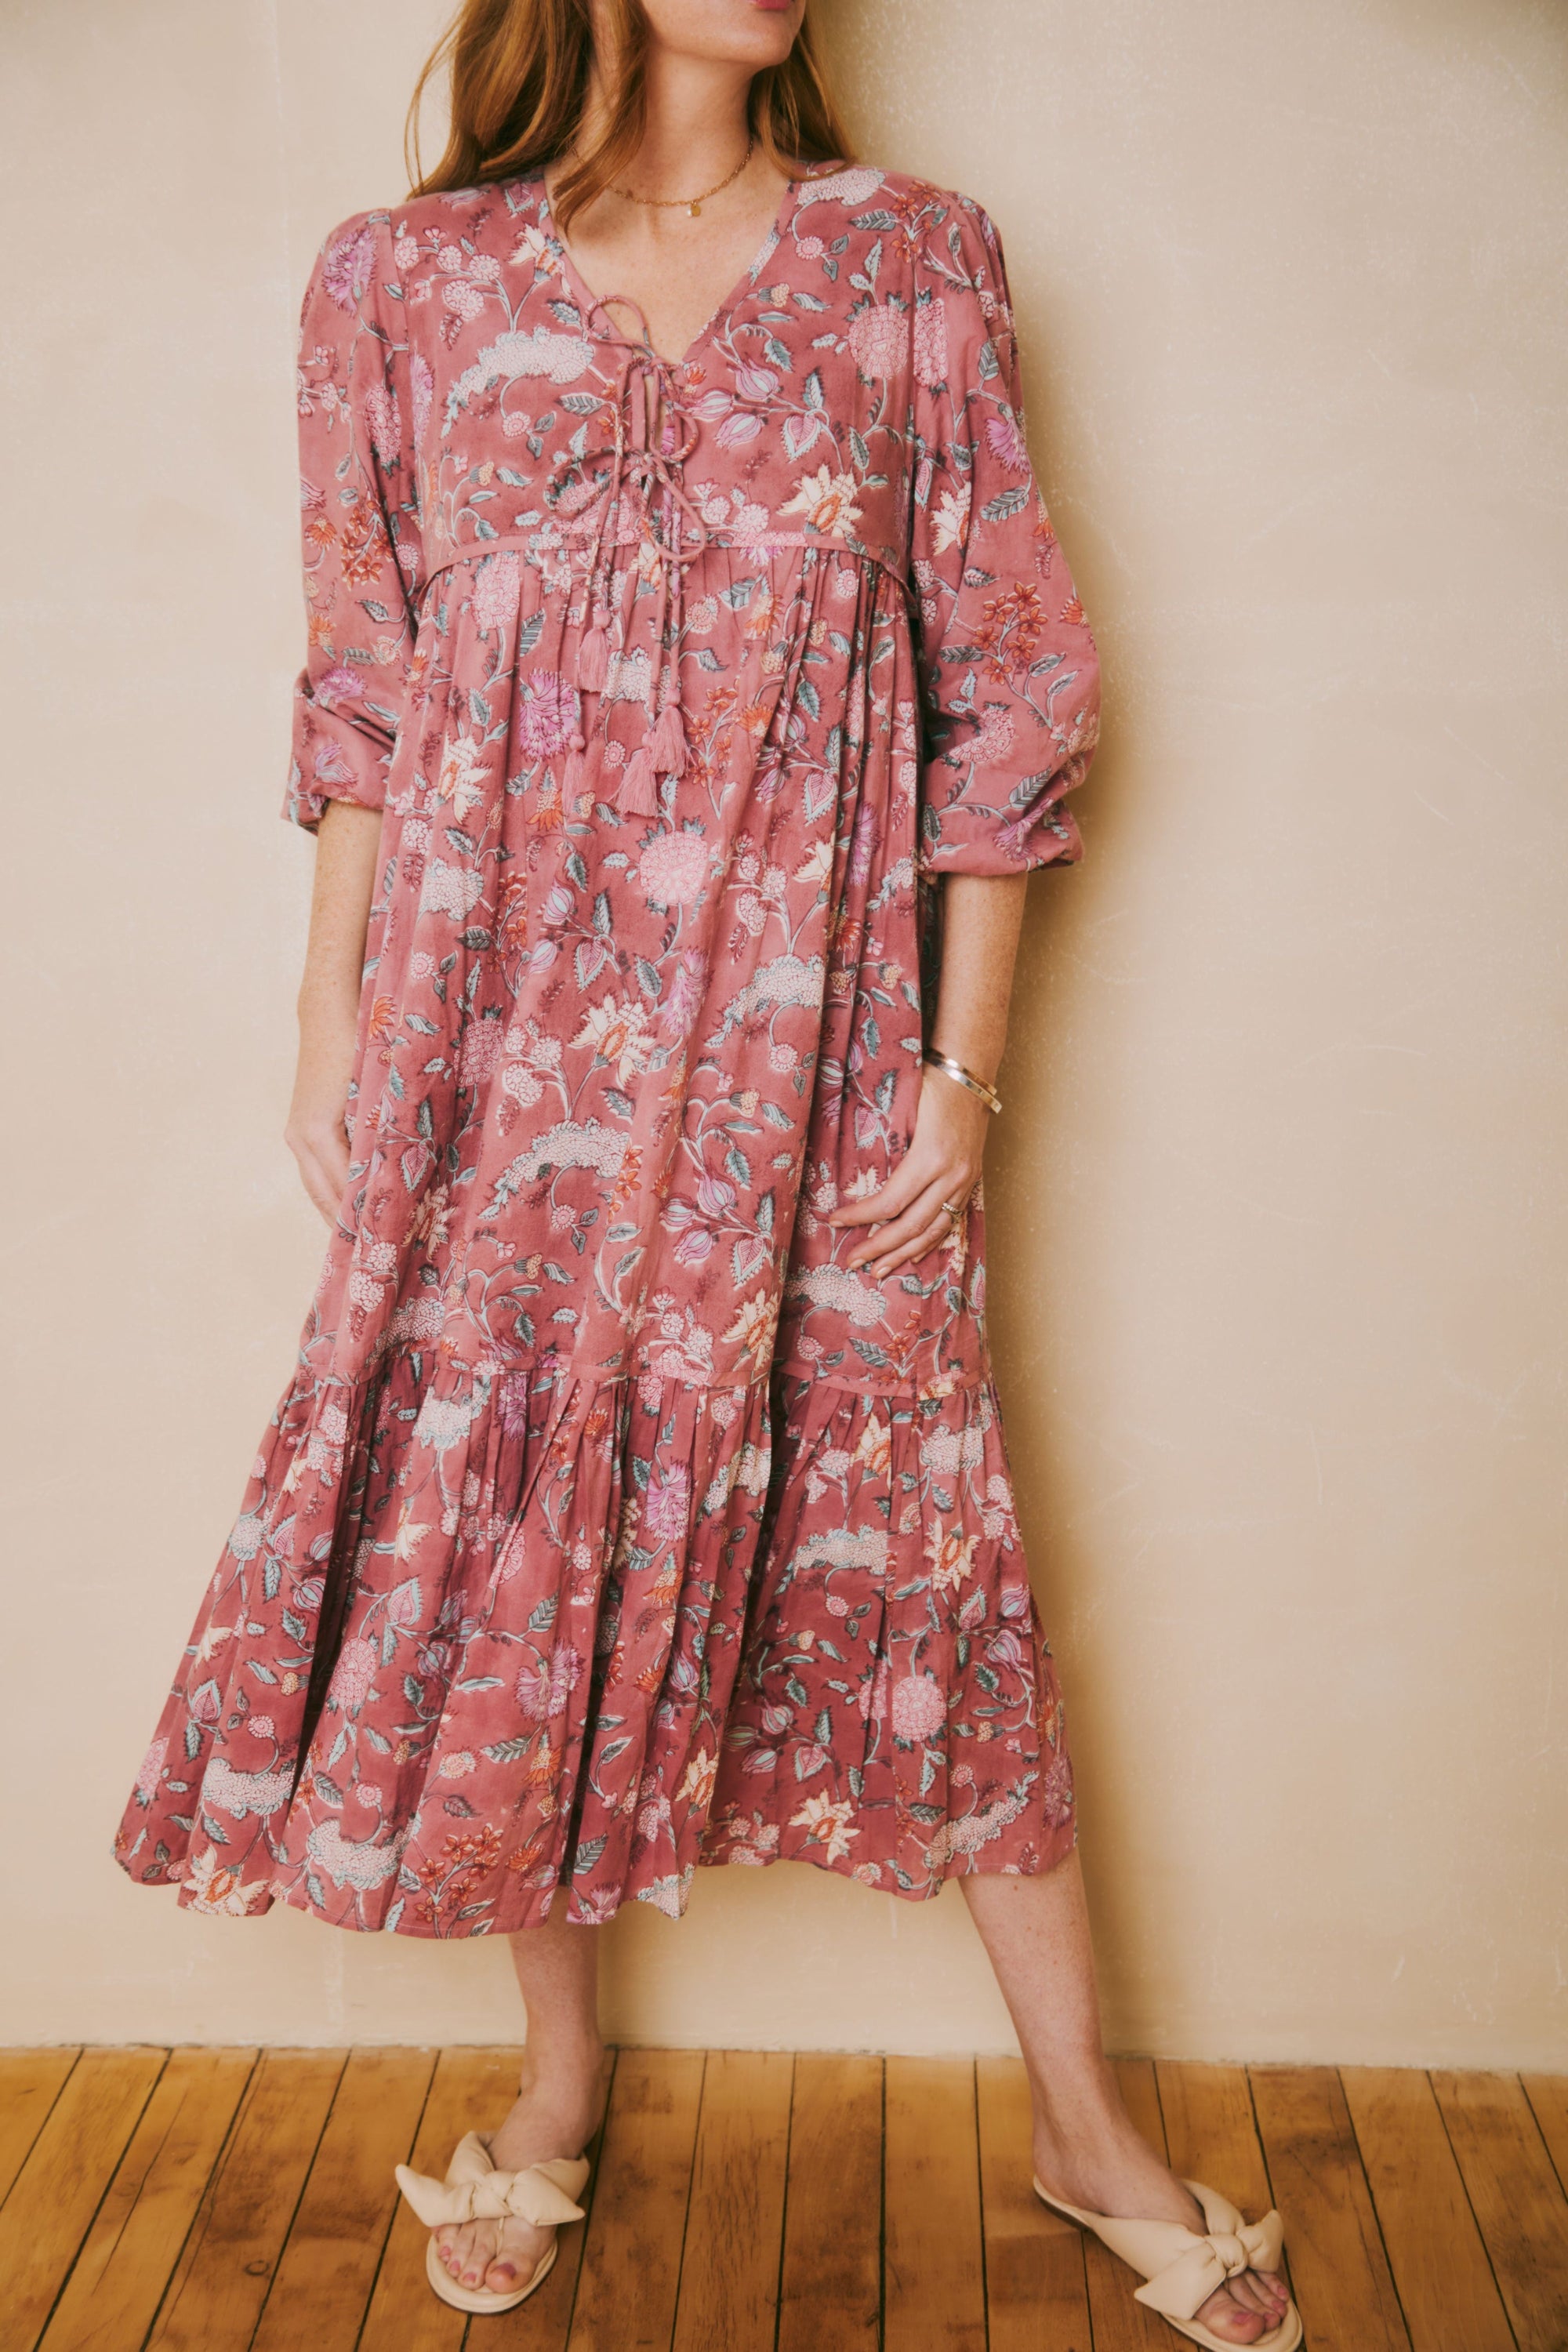 Evie Pink Floral Print Dress - FINAL SALE